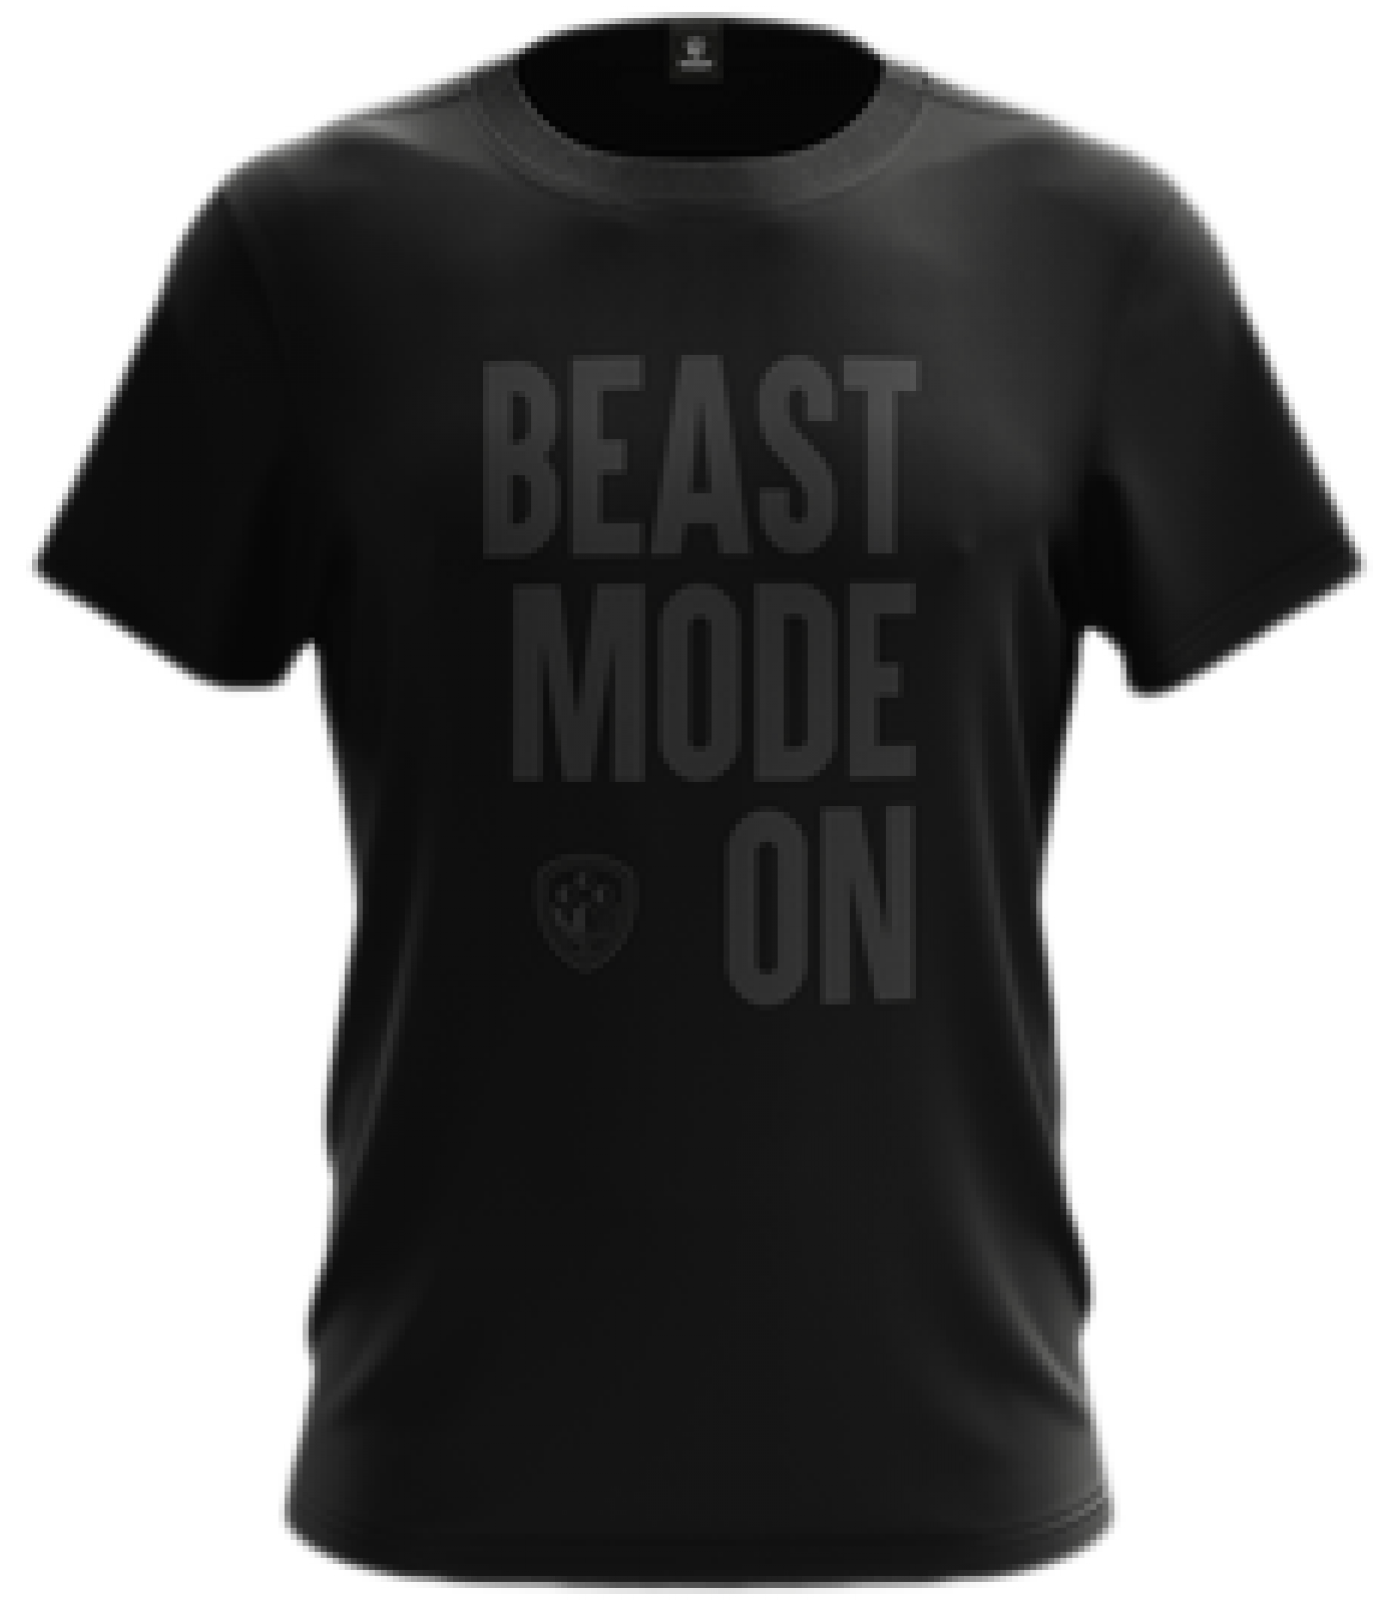 SWEDISH Supplements T-Shirt / Beast Mode ON